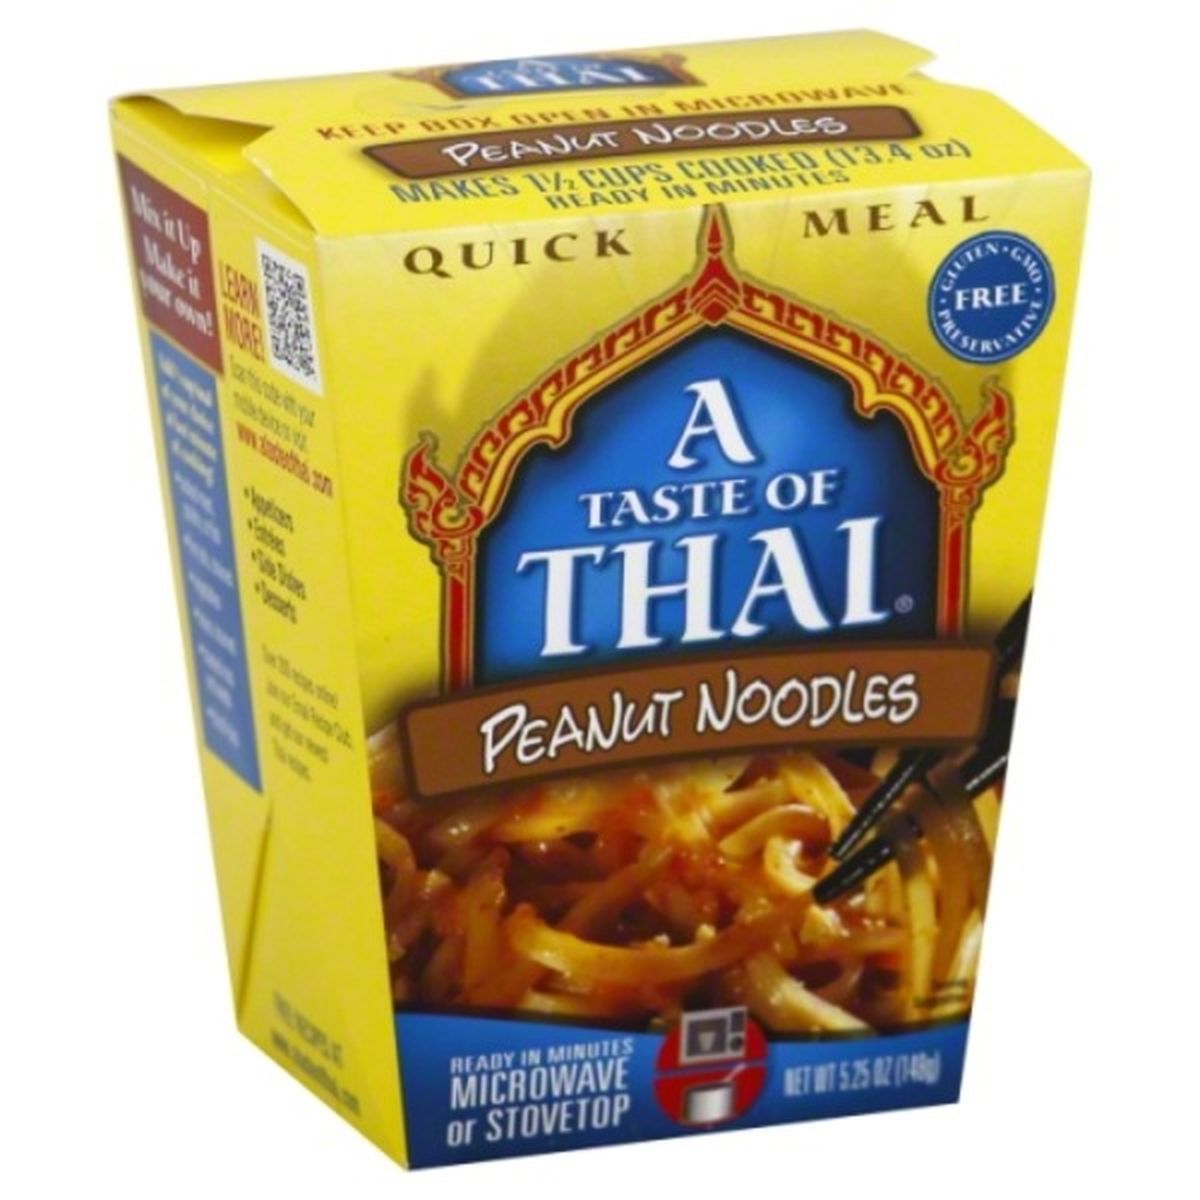 Calories in A Taste of Thai Peanut Noodles